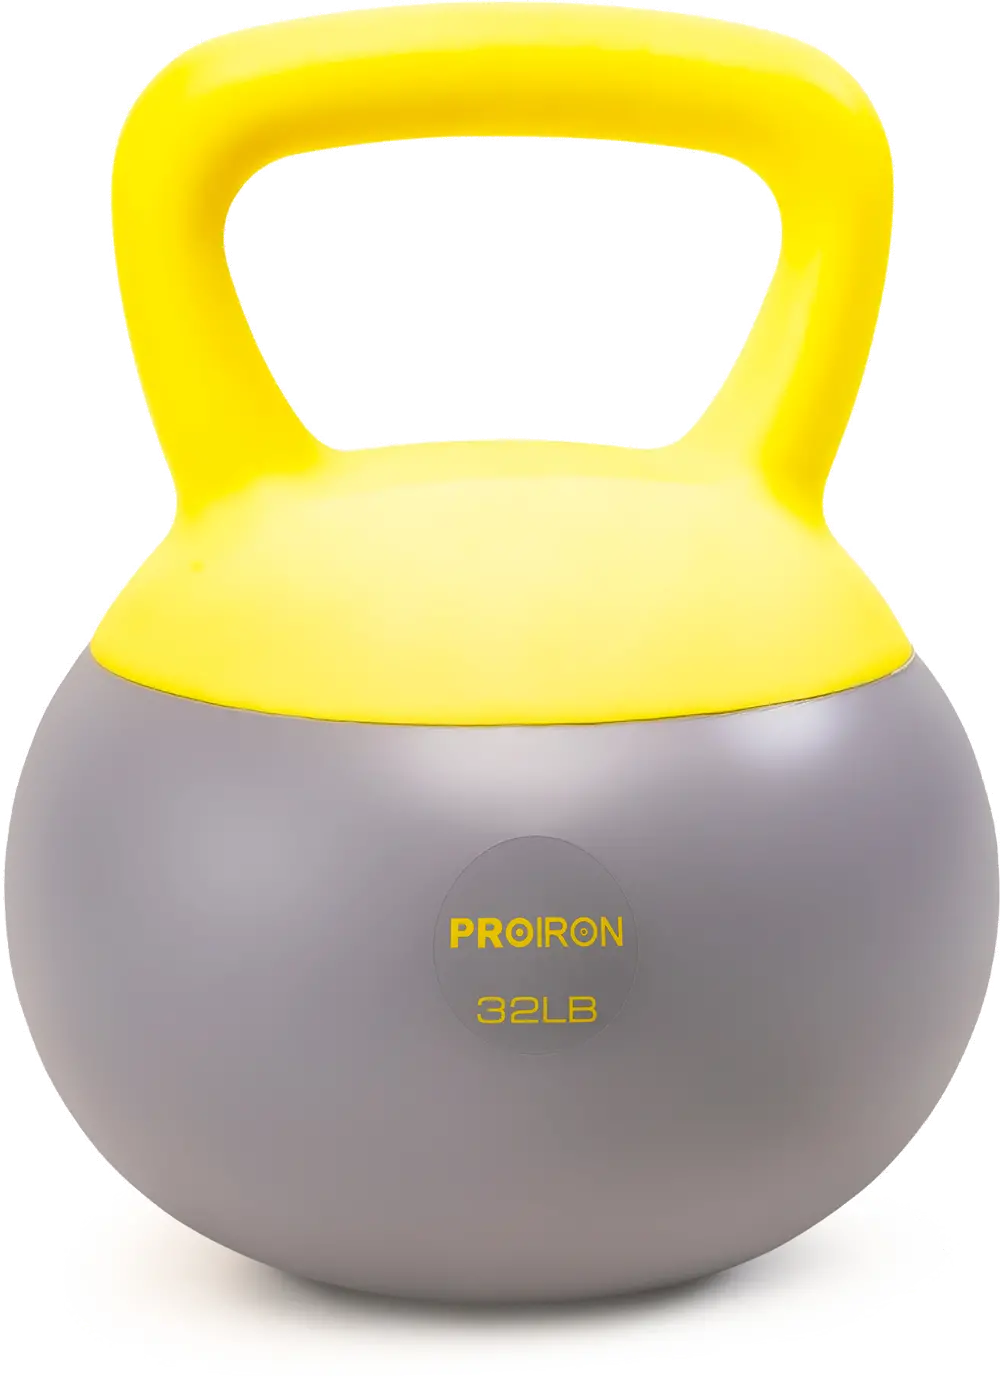 PRO-HL32L PROIRON 32 lb. Soft Kettlebell-1